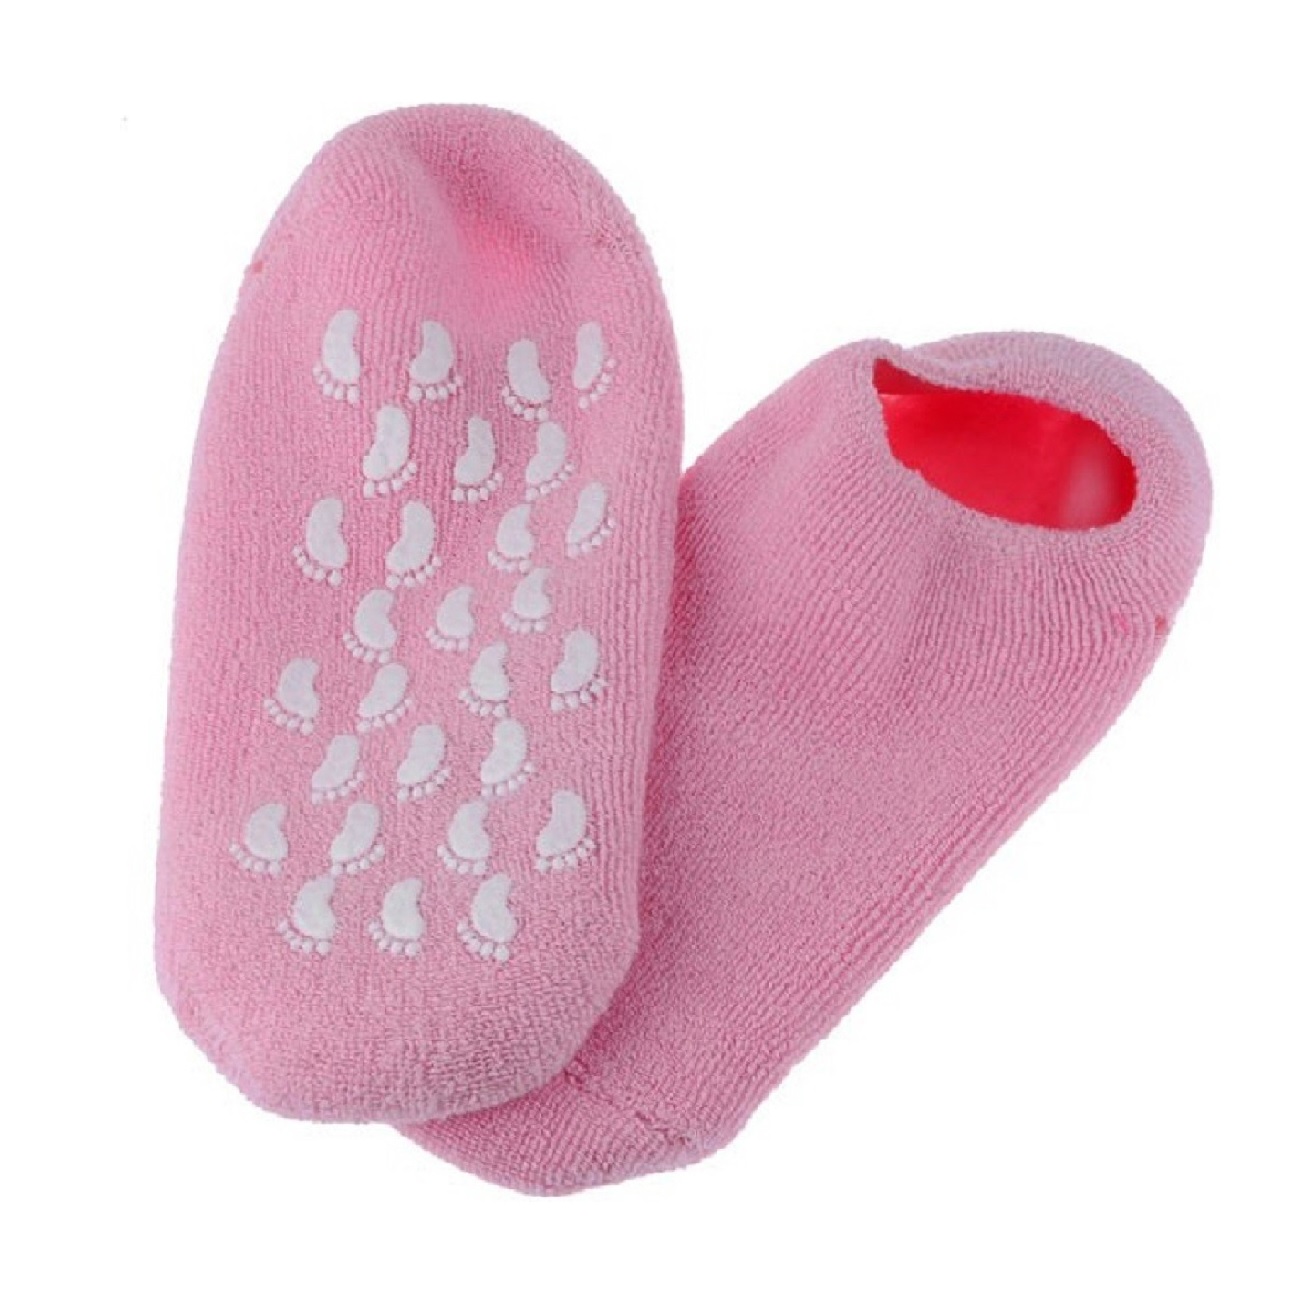 Moisturizing Socks Lotion Gel for Dry Cracked Heels 4 Pack, Spa Gel So –  Nado Care